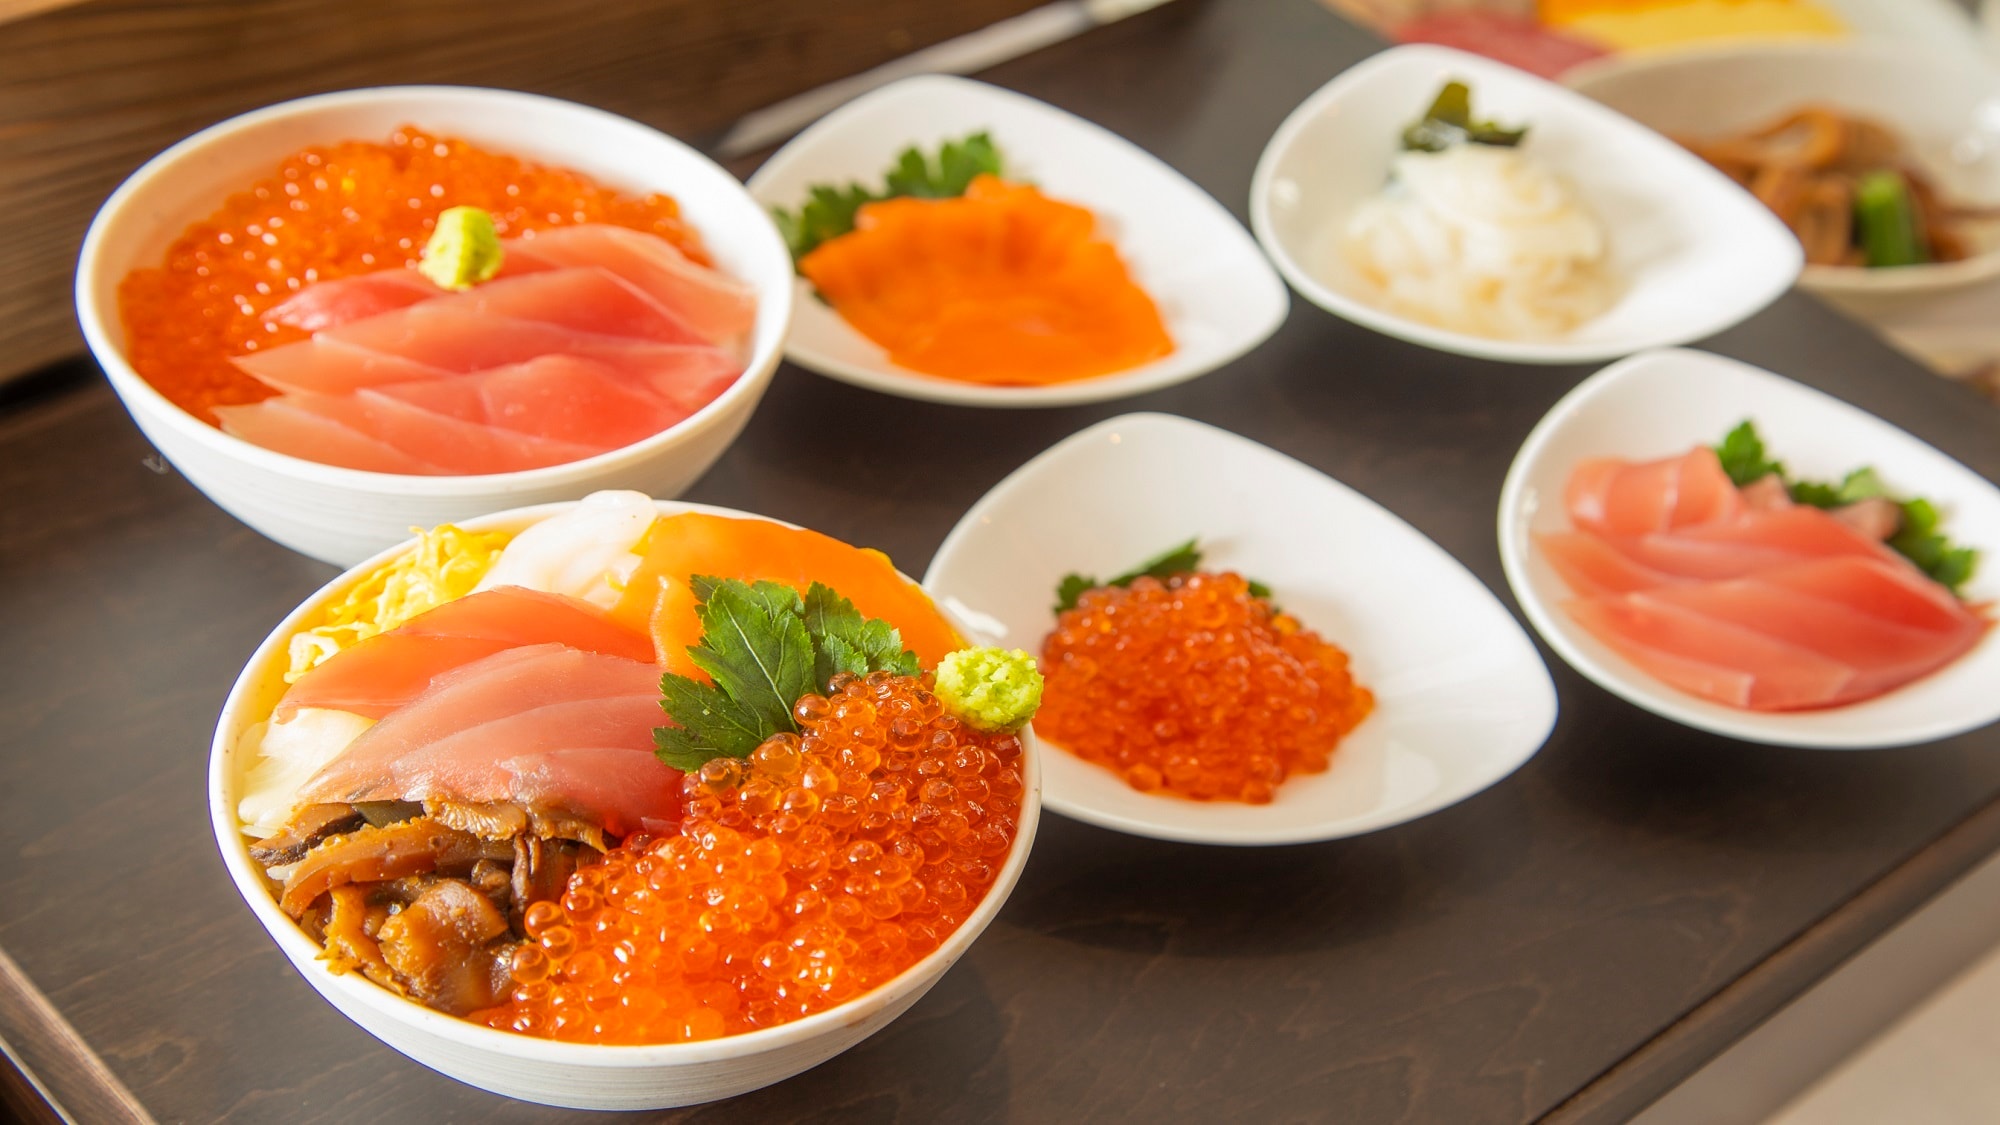 ◆ Seafood bowl made with as many seafood as you like! (image)